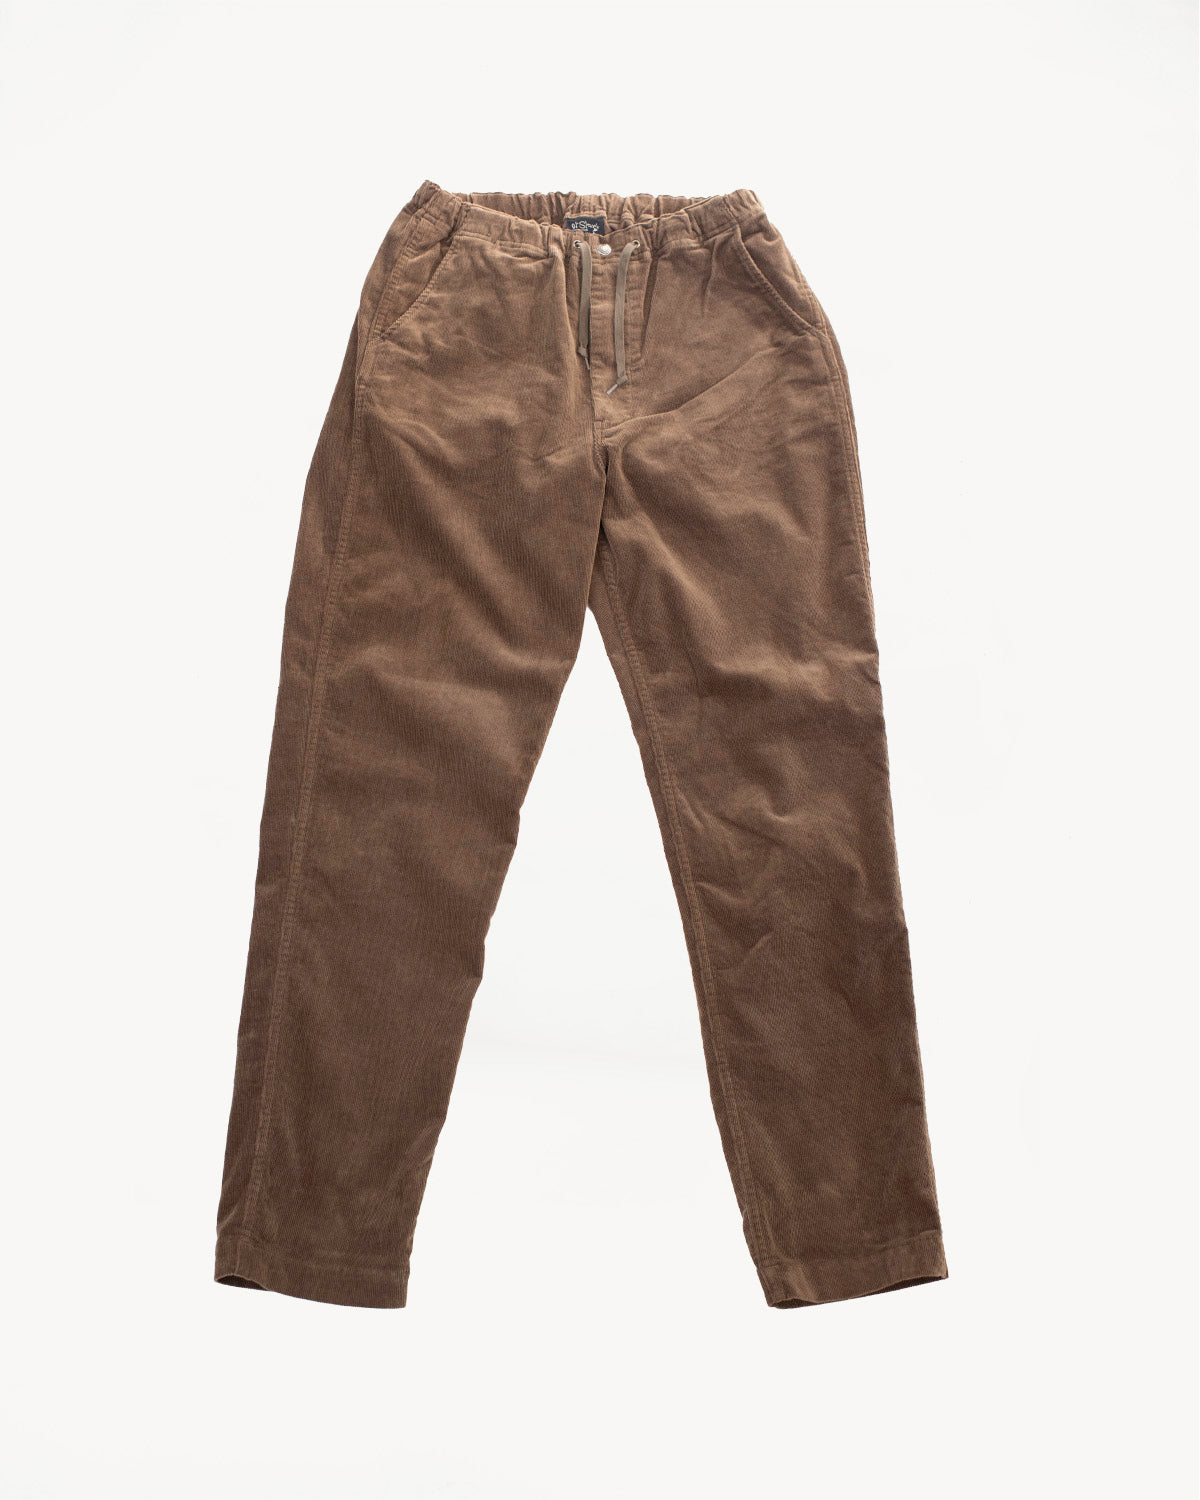 03-1002-C53M - New Yorker Pant Stretch Corduroy - Brown